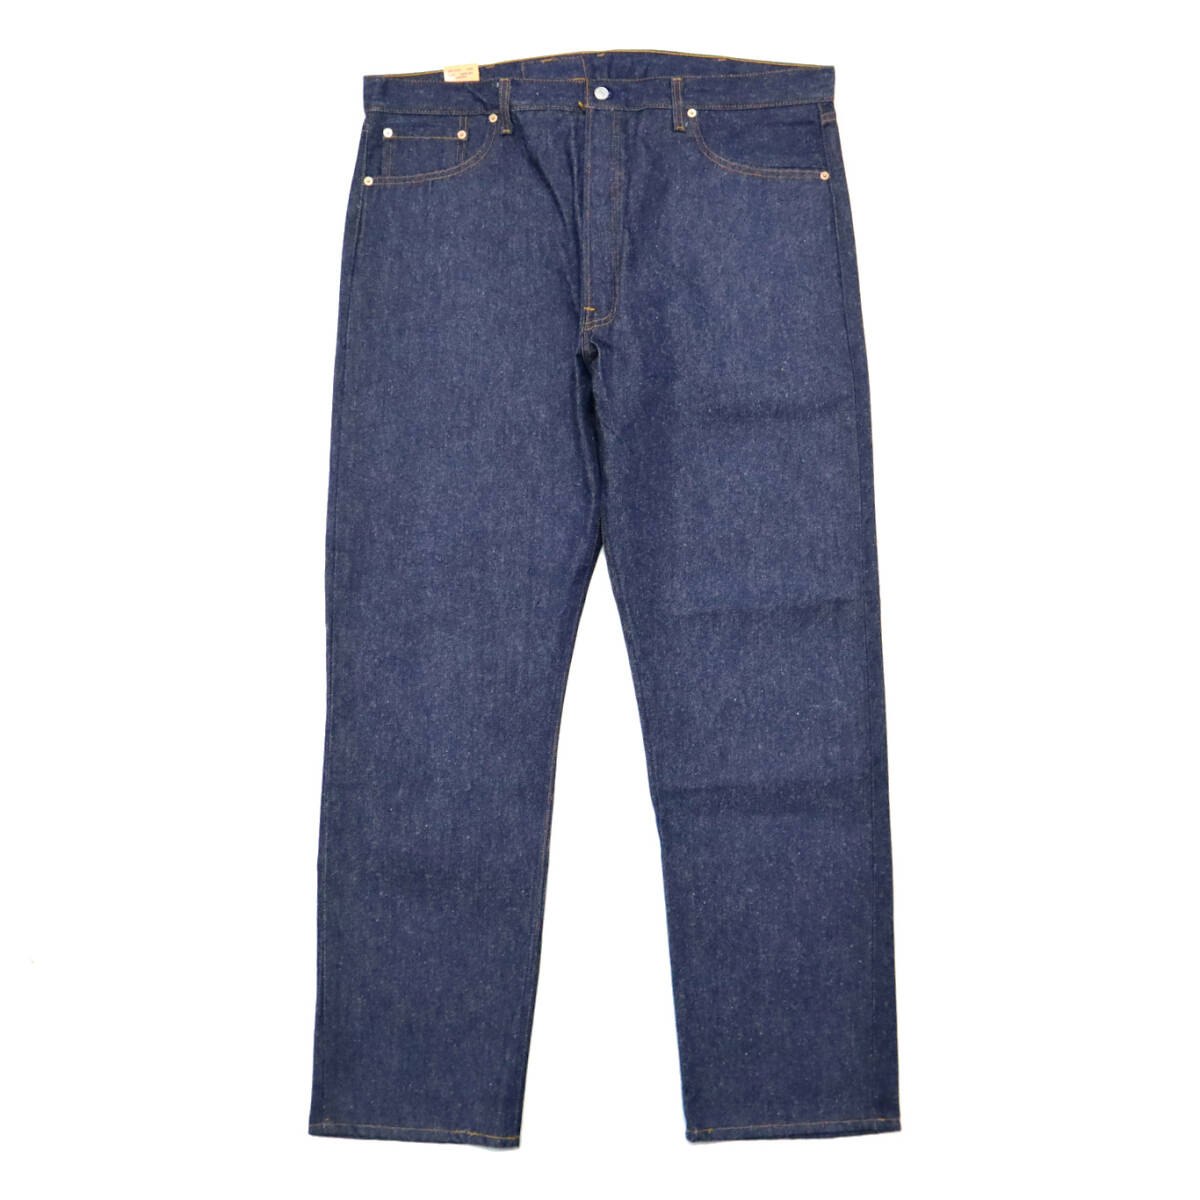  dead stock 90s Vintage LEVIS USA made Levi's 501 strut Denim pants W42 L34 jeans rigid old clothes 90 period ji- bread 